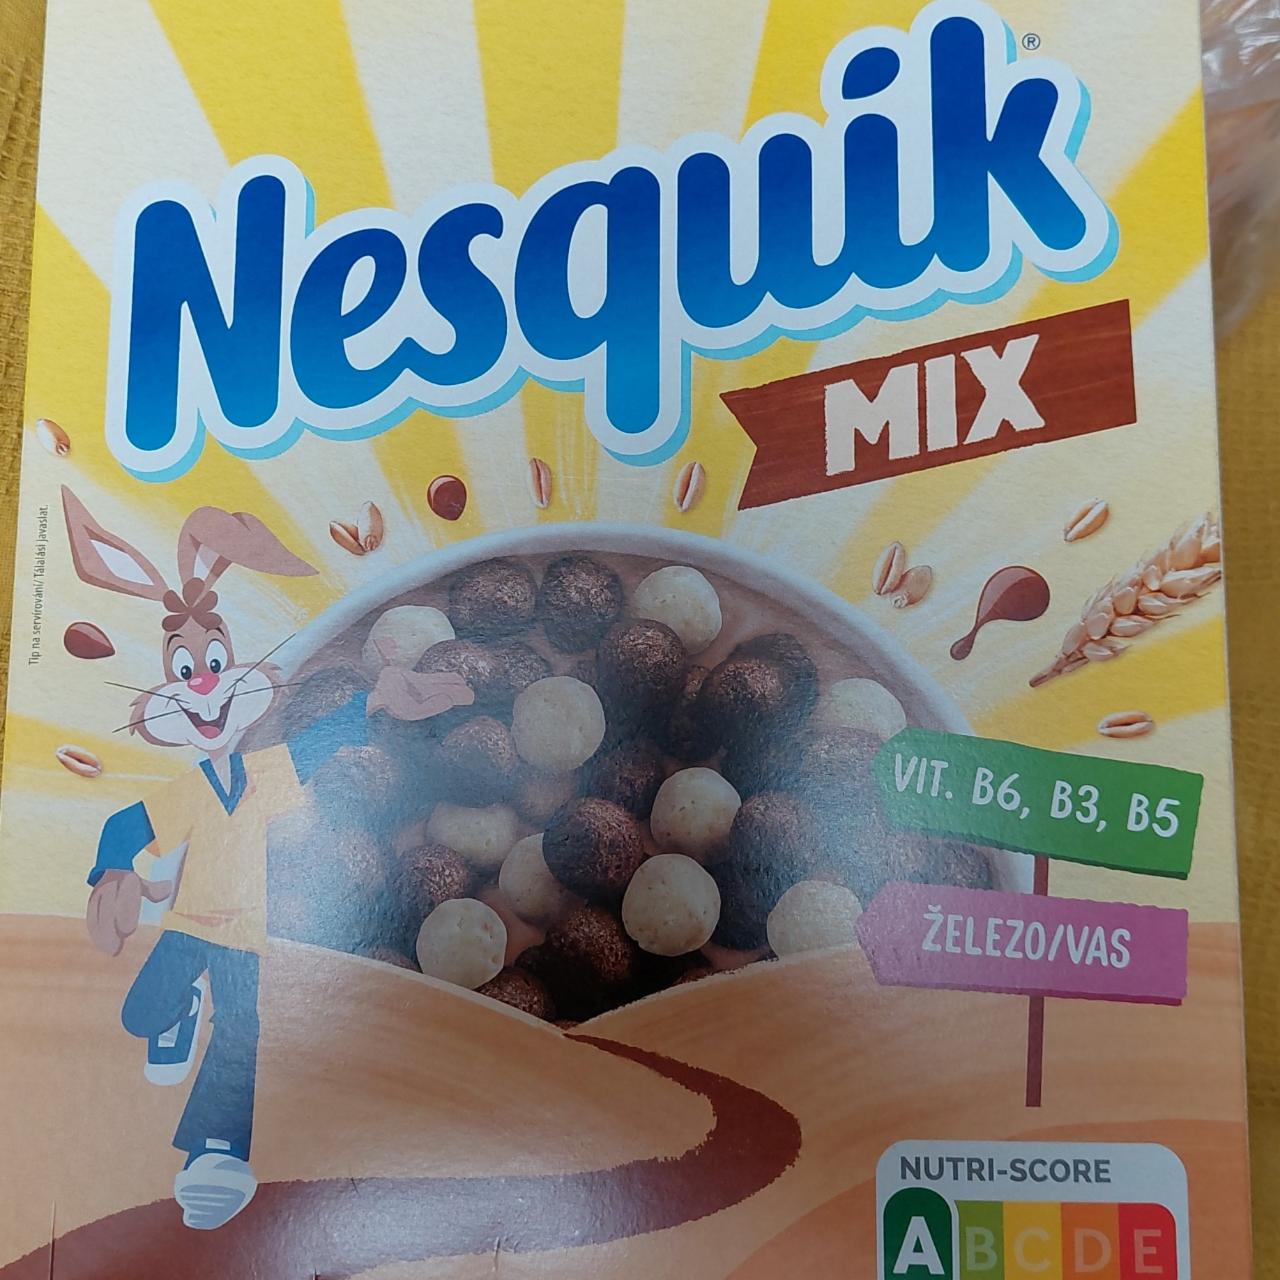 Fotografie - Nesquik MIX Nestlé